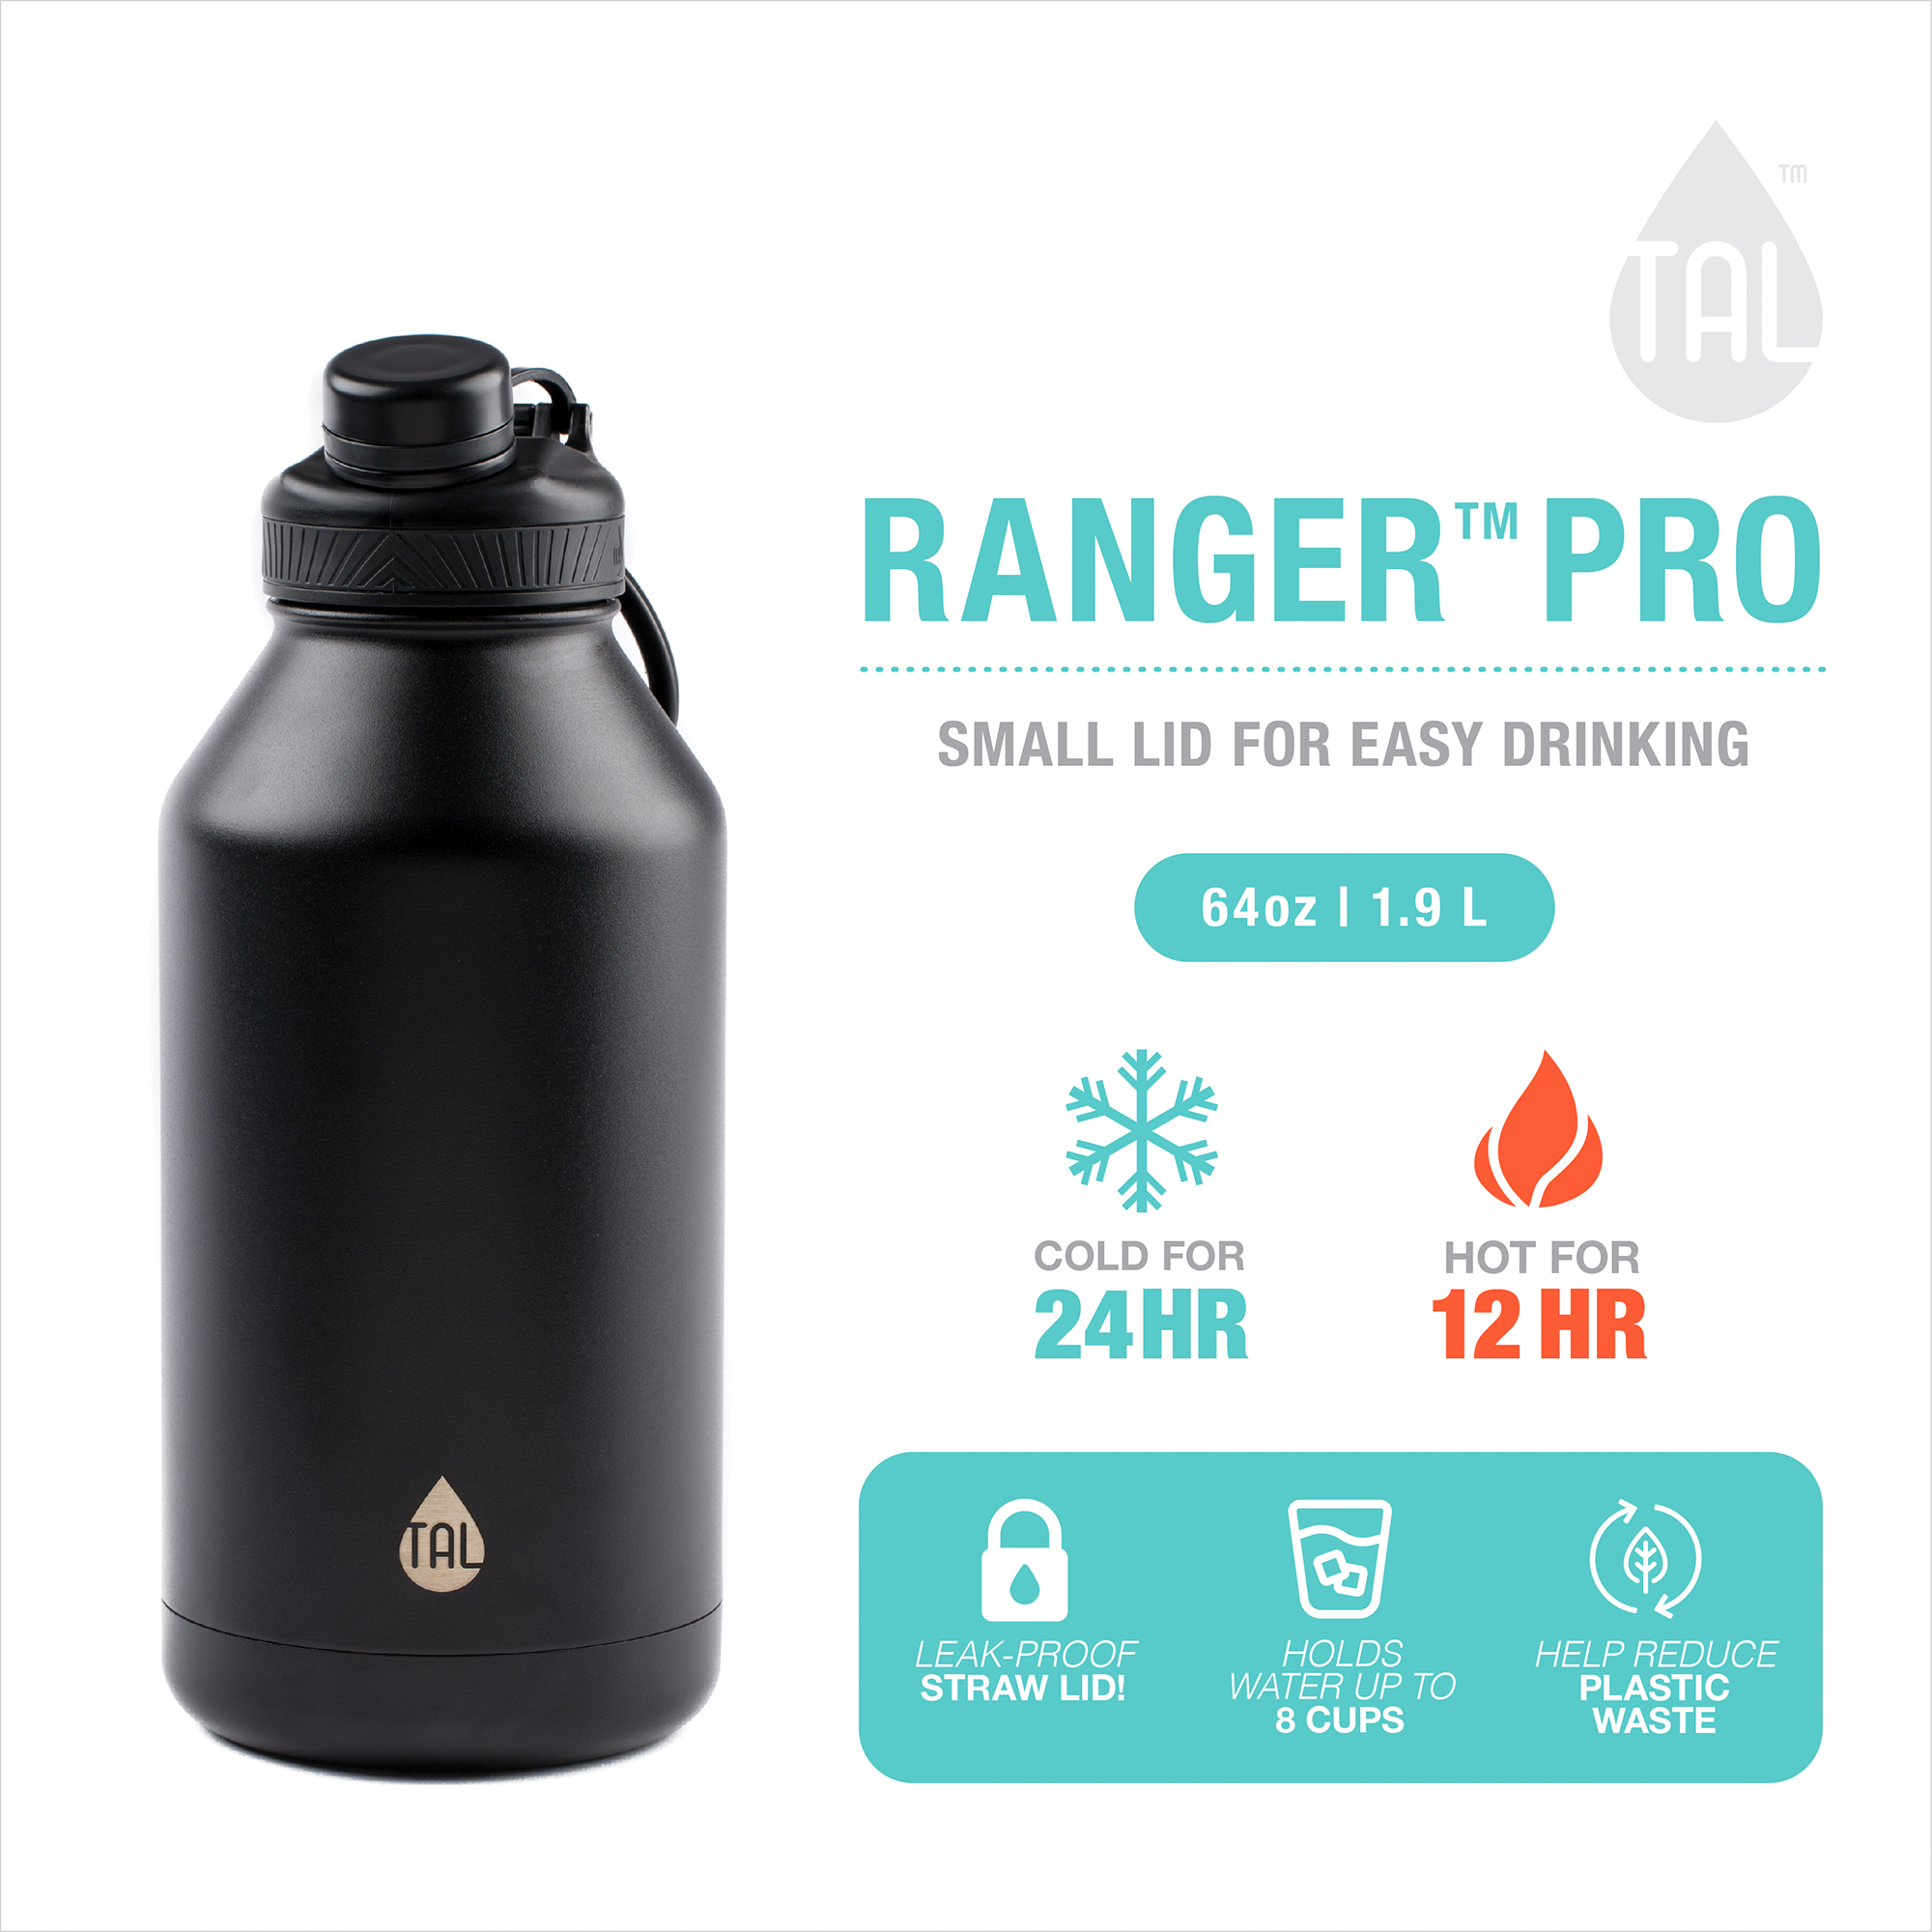 TAL Stainless Steel Ranger Water Bottle 64oz, Black - image 3 of 6